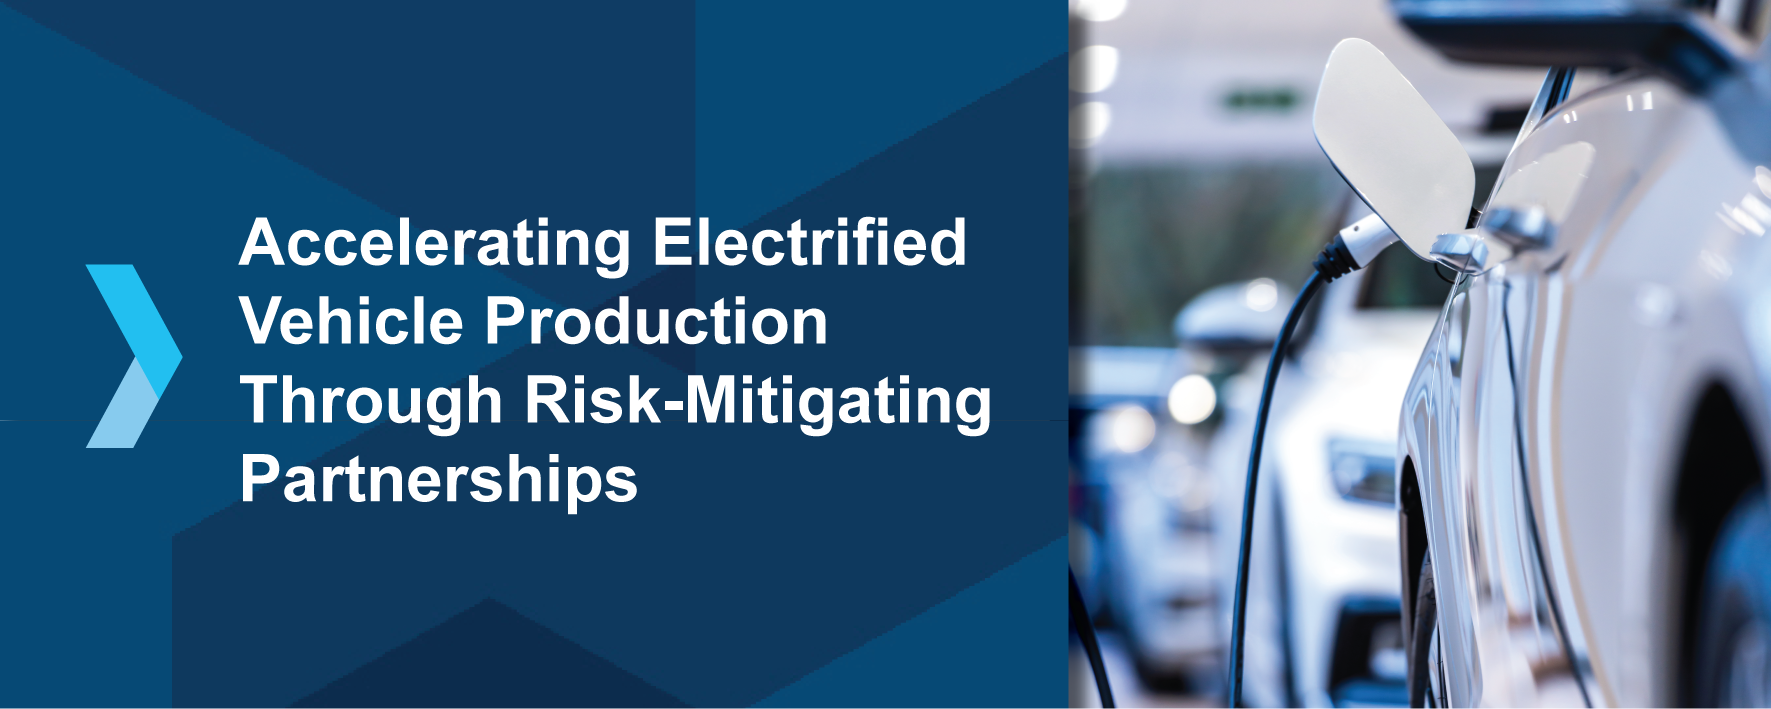 Whitepaper: Accelerating Electrified Vehicle Production Through Risk-Mitigating Partnerships